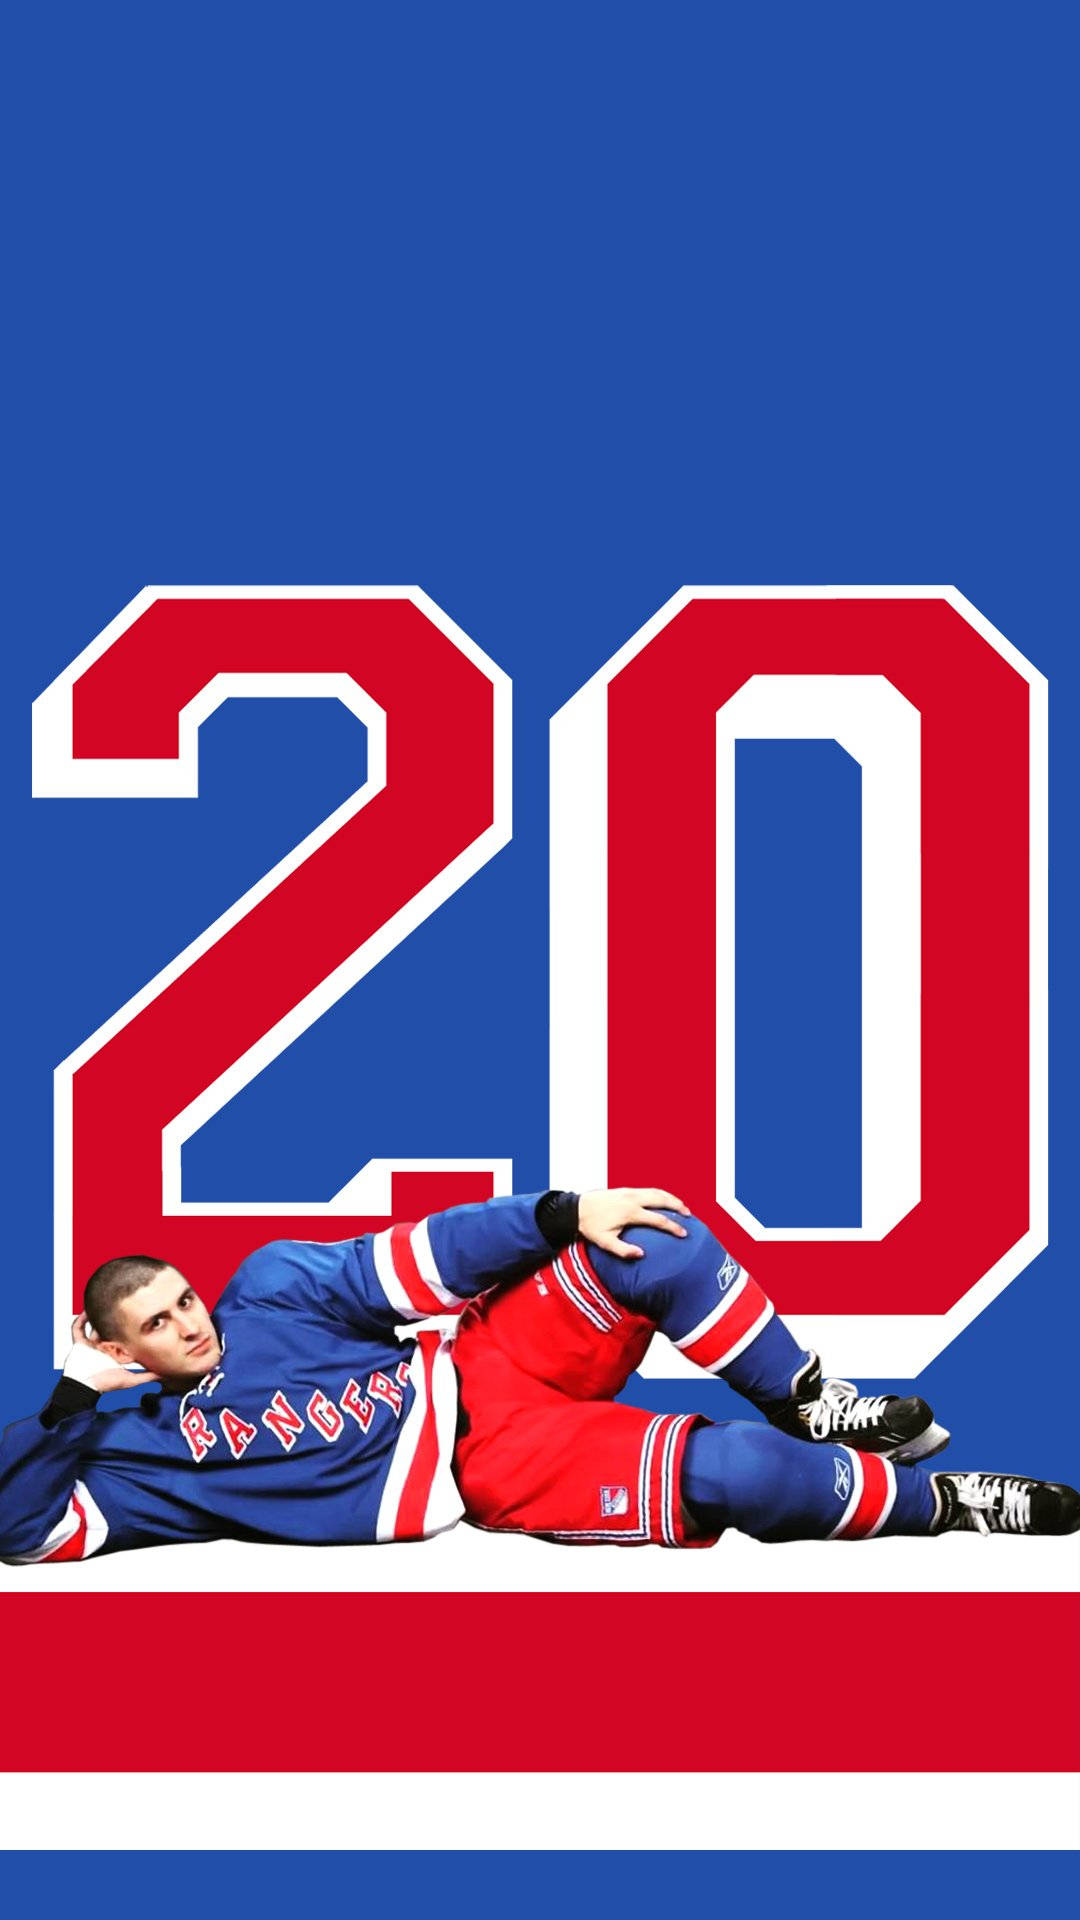 Chriskreider New York Rangers Professionell Ishockeyspelare. Wallpaper